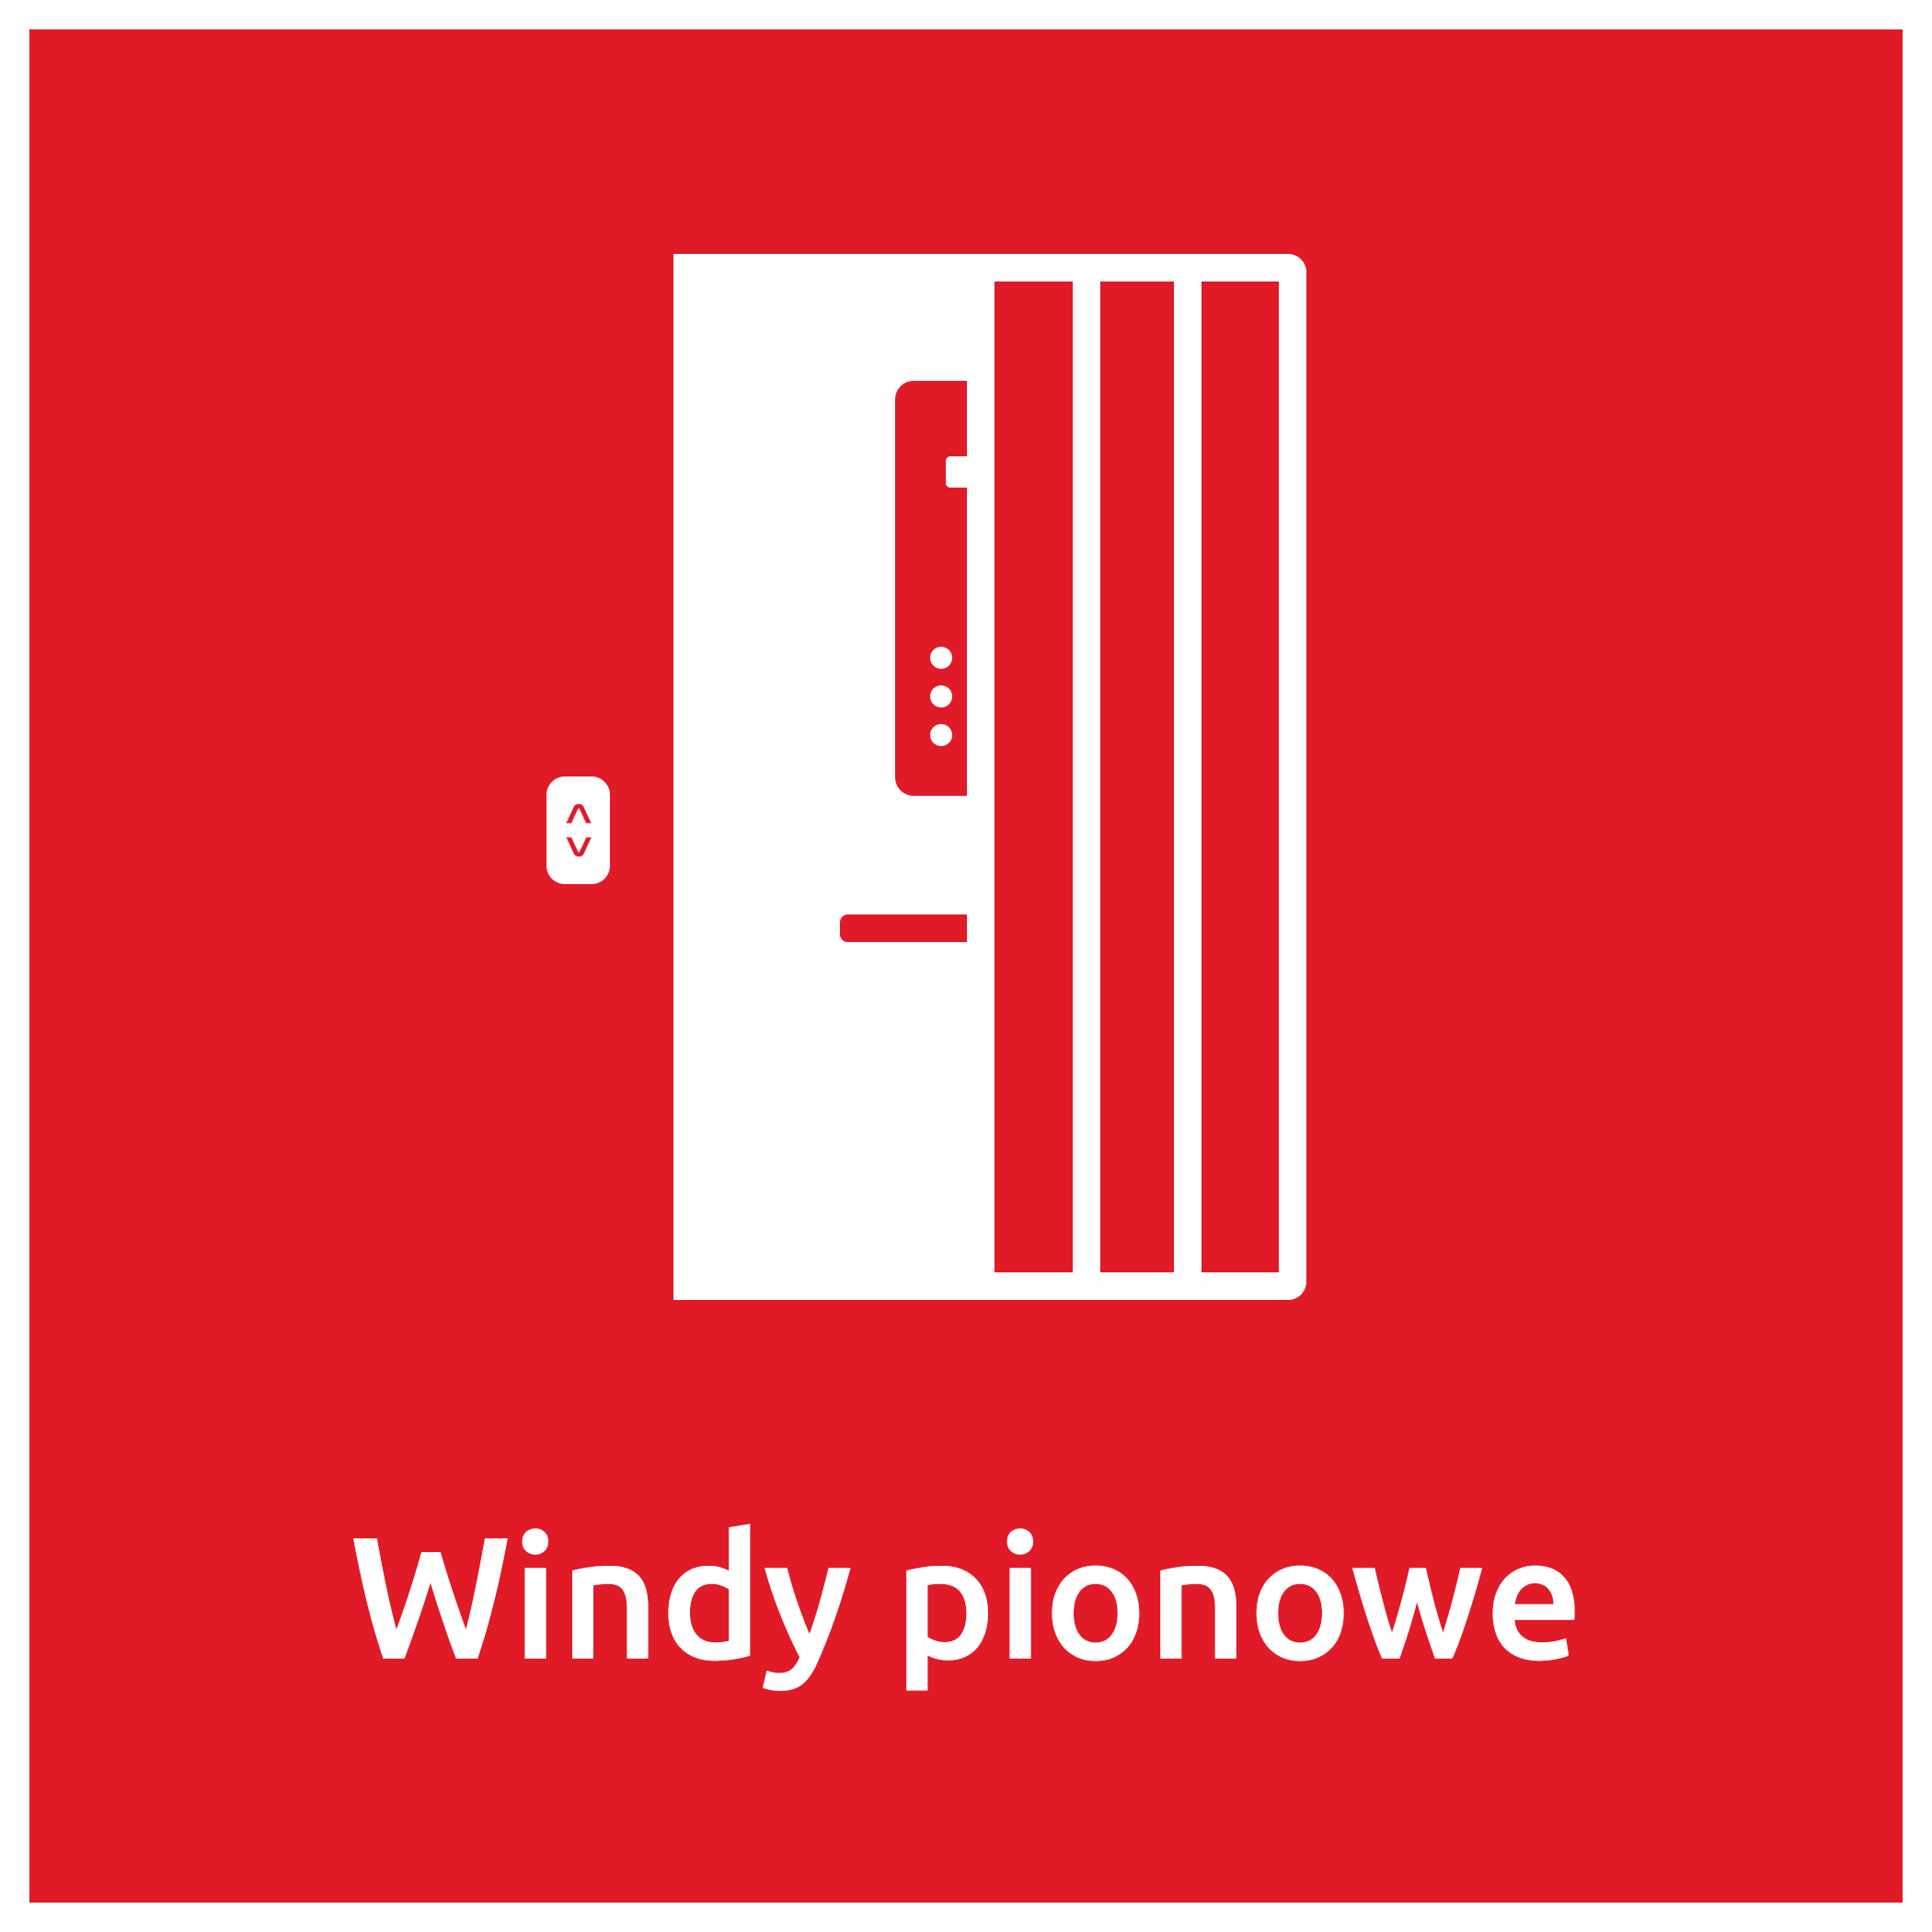 Windy Pionowe Elevator